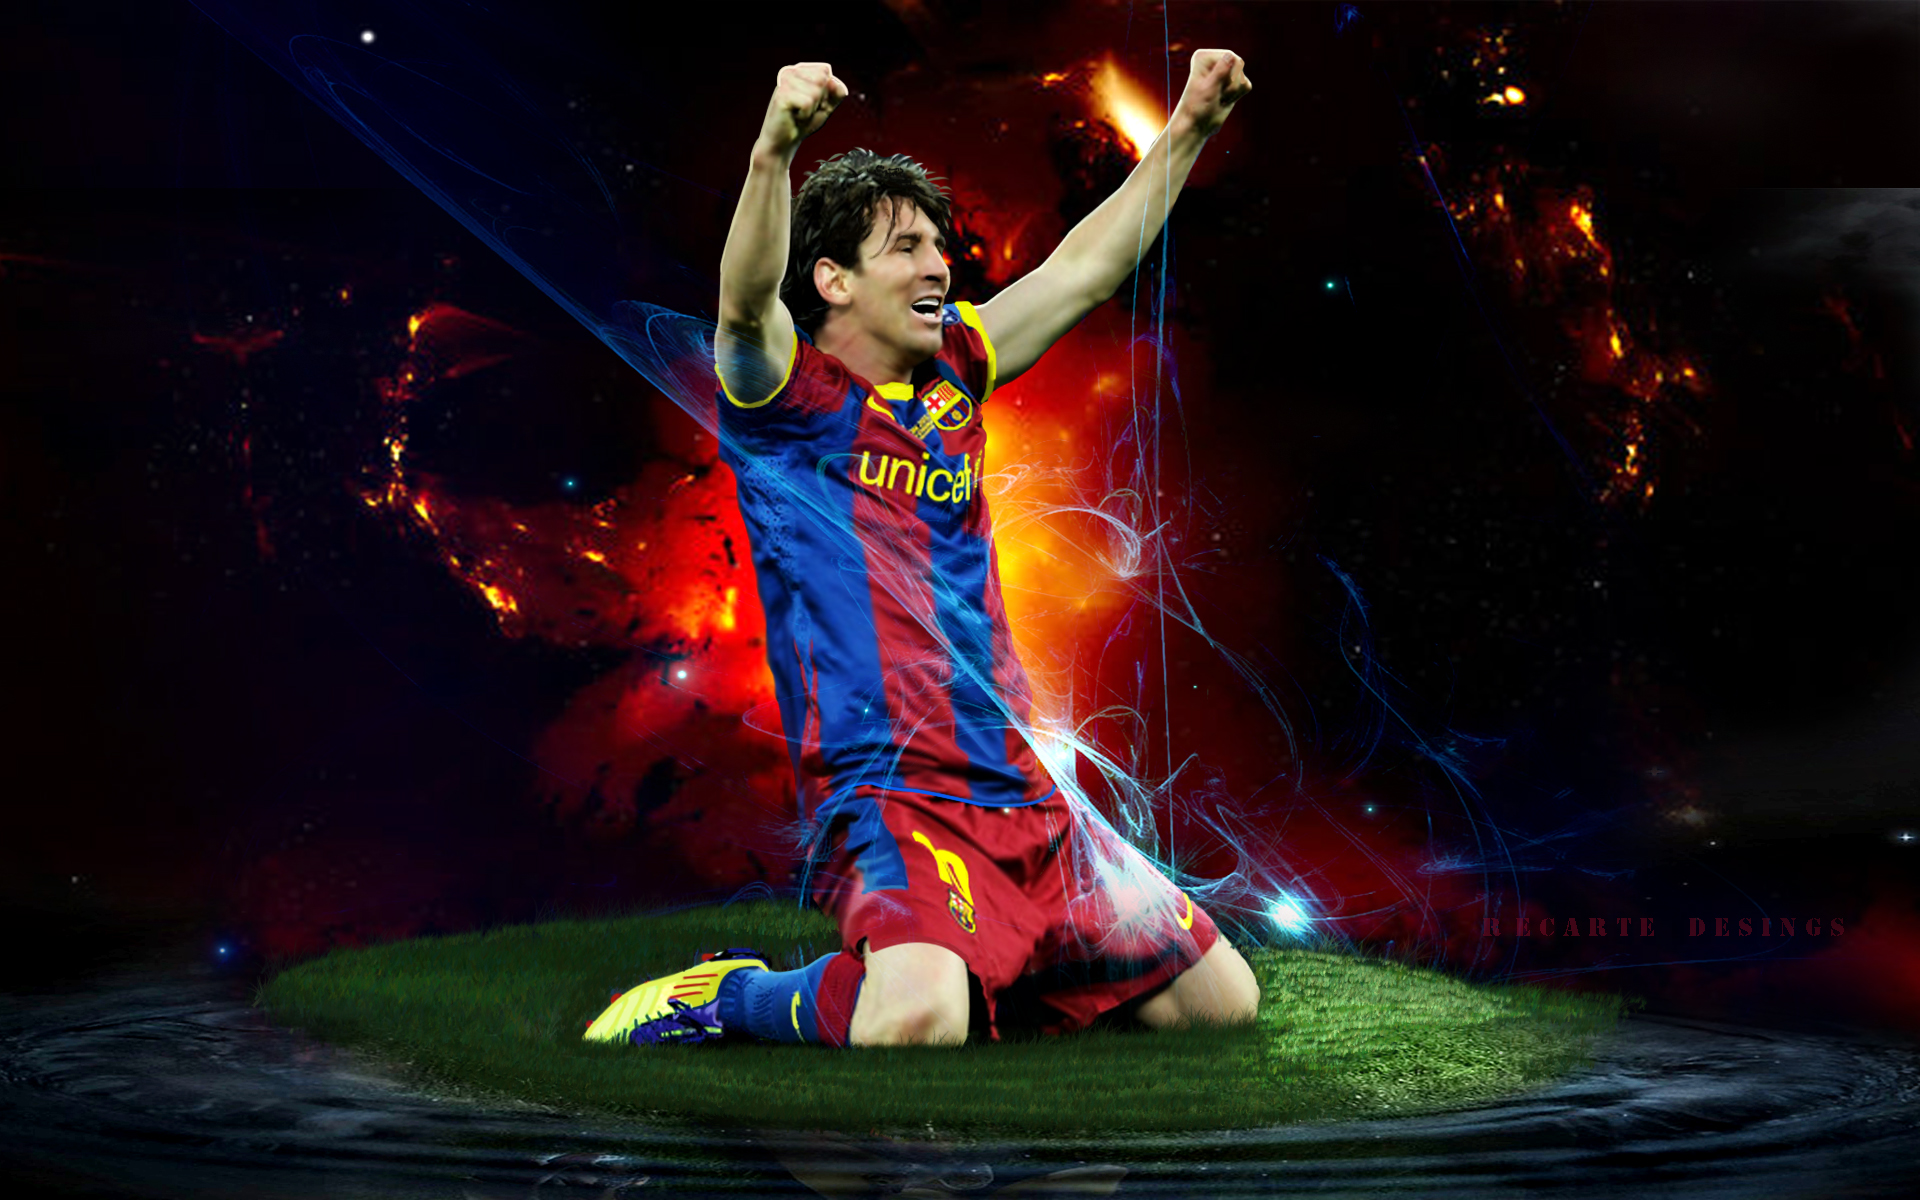 Messi Wallpaper unicef